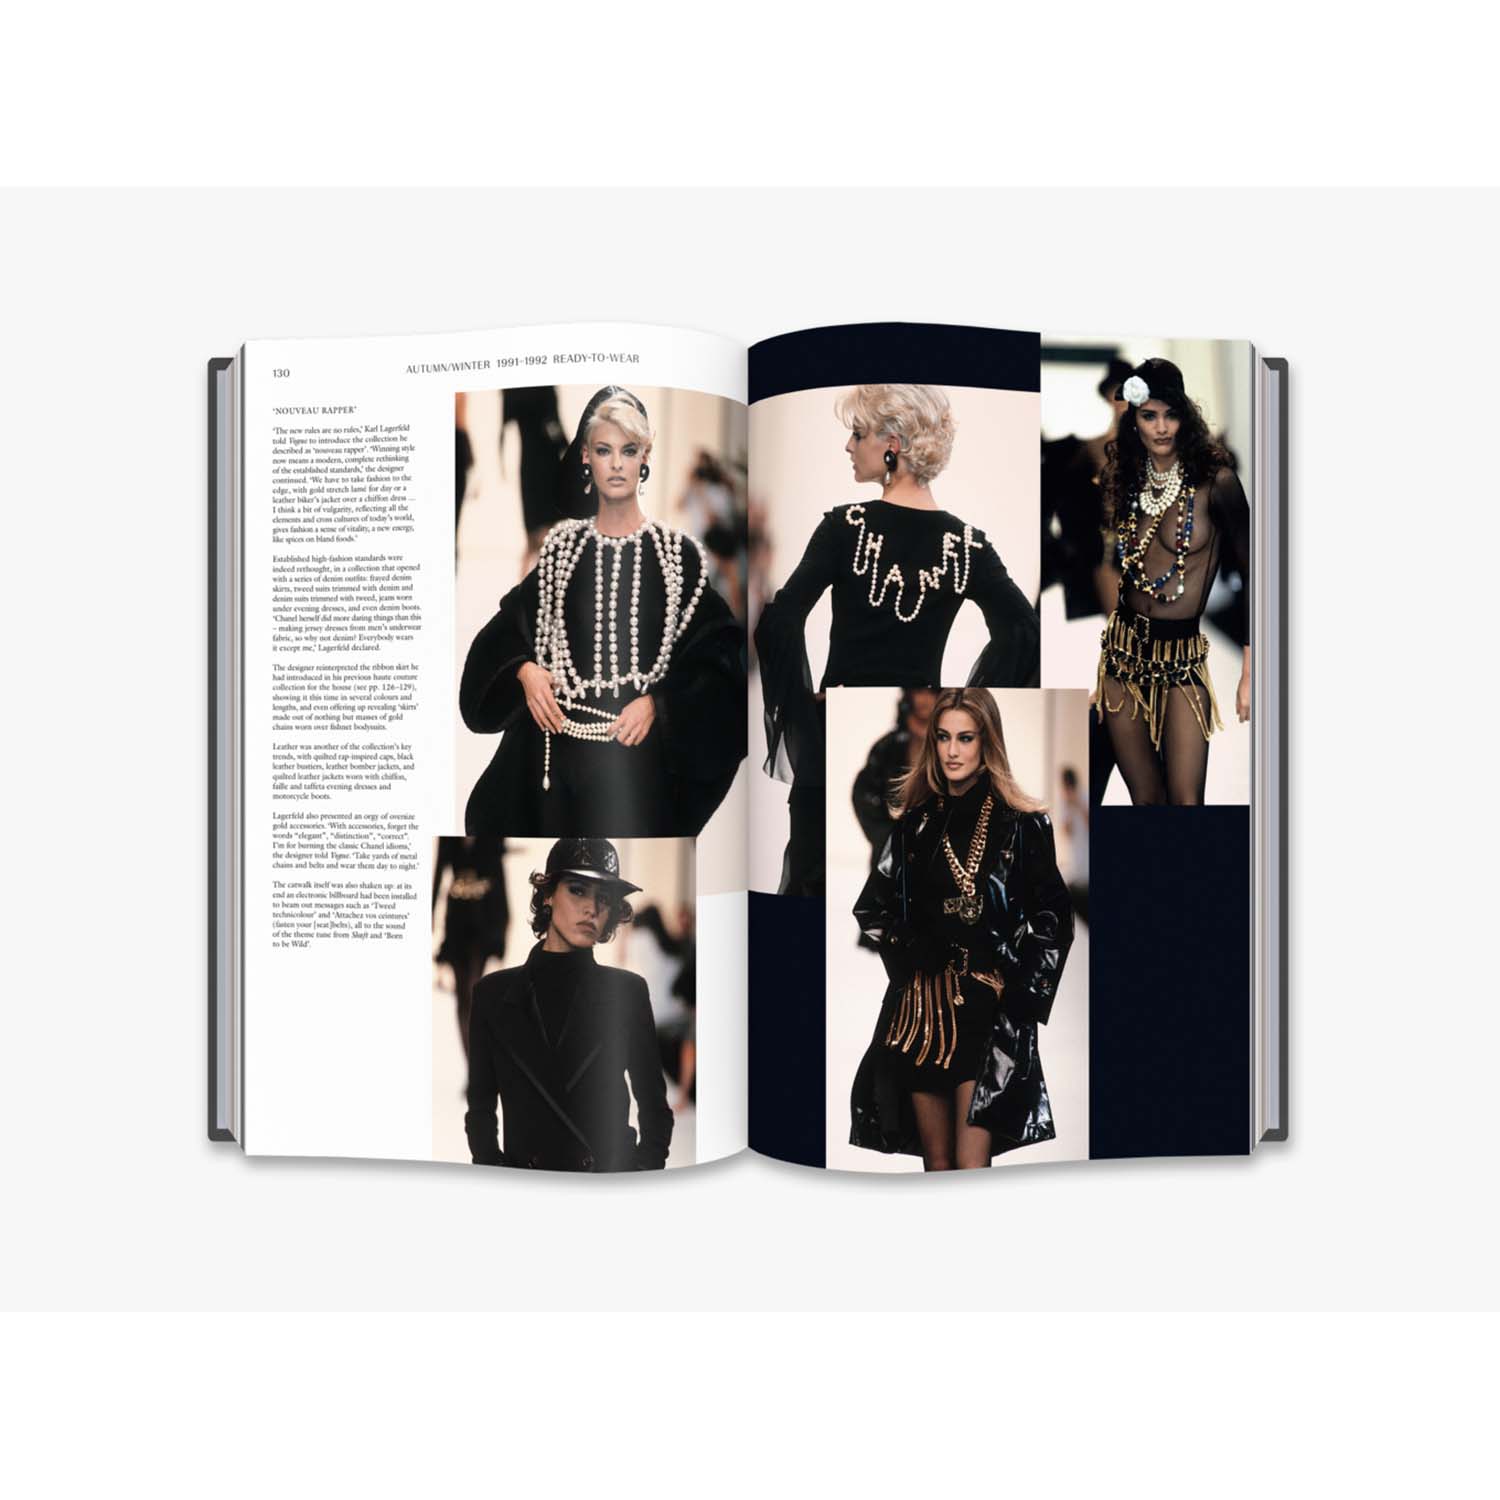 Dior Catwalk Book - New Mags @ RoyalDesign